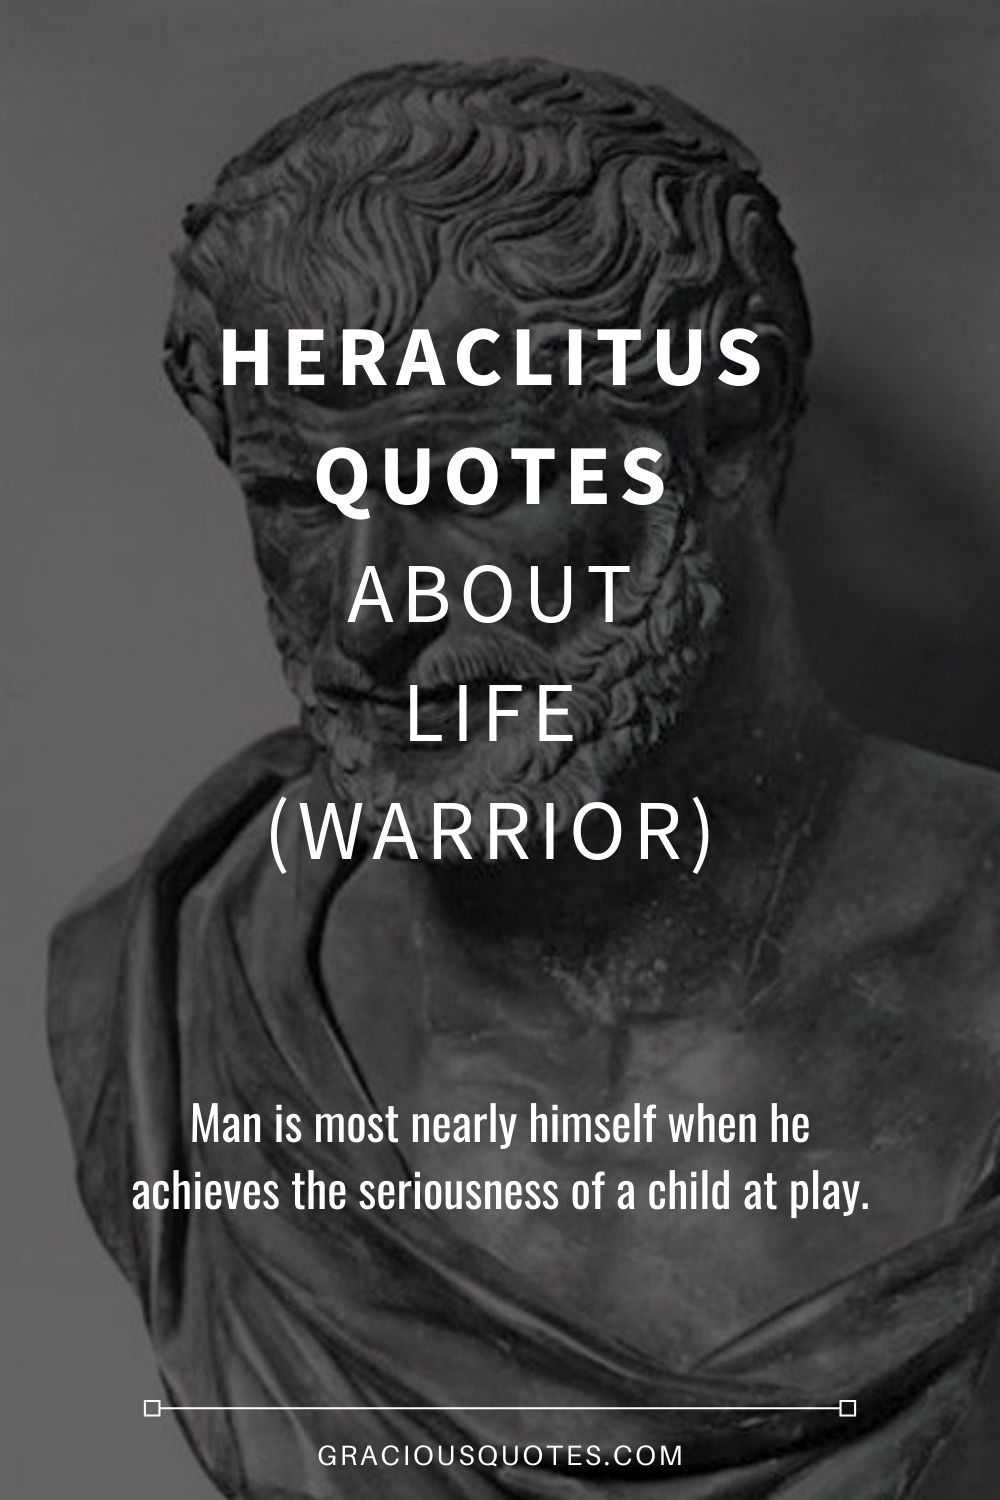 Heraclitus Quotes About Life (WARRIOR) - Gracious Quotes